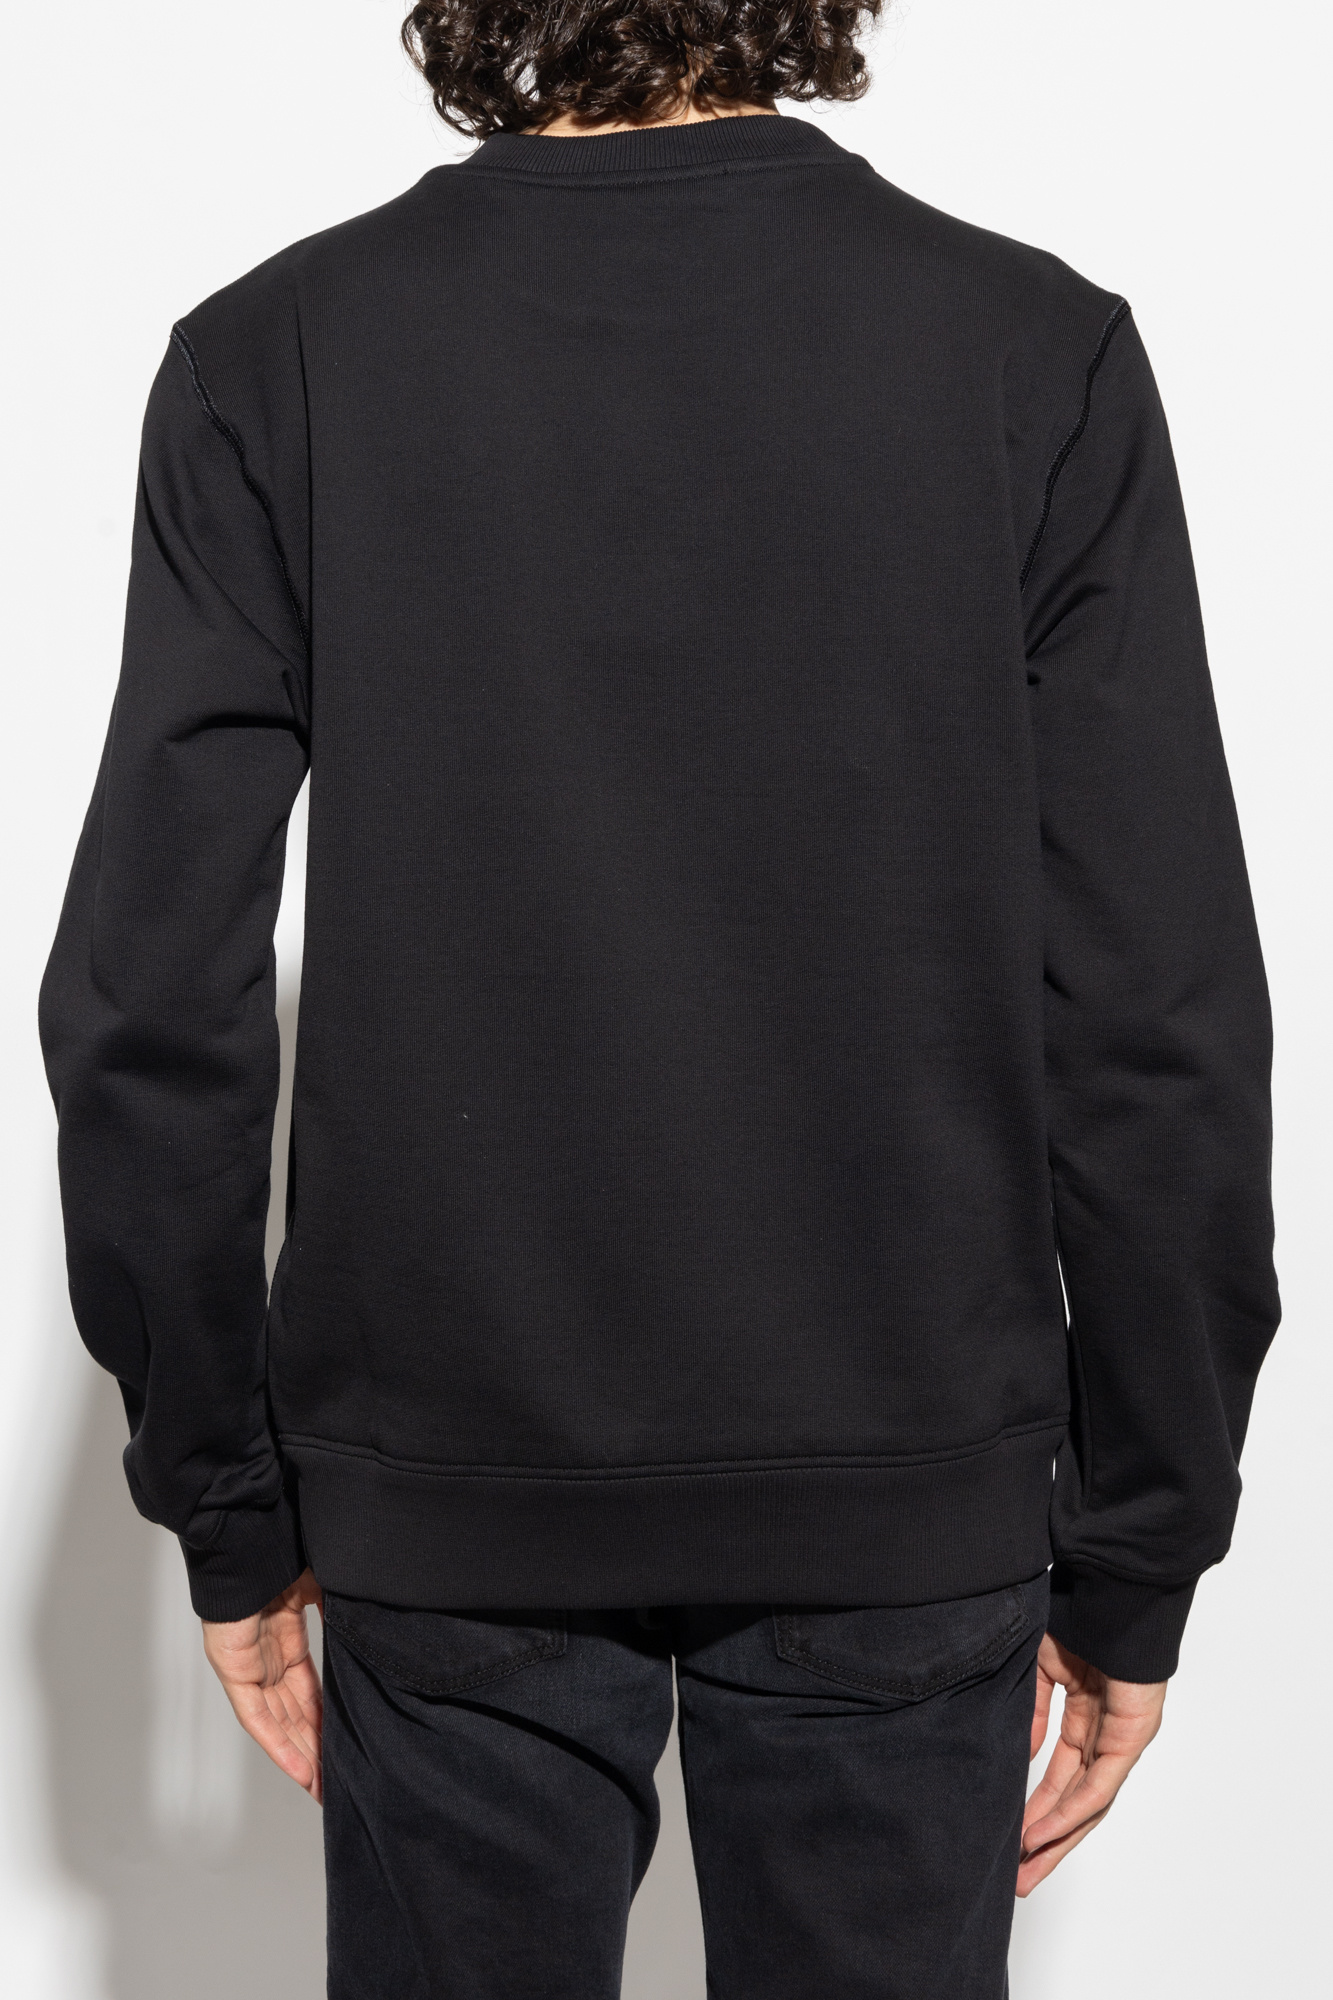 Black Sweatshirt with logo Dolce mittelgroe IetpShops - sicily & dolce 90s item - Australia gabbana schultertasche Gabbana